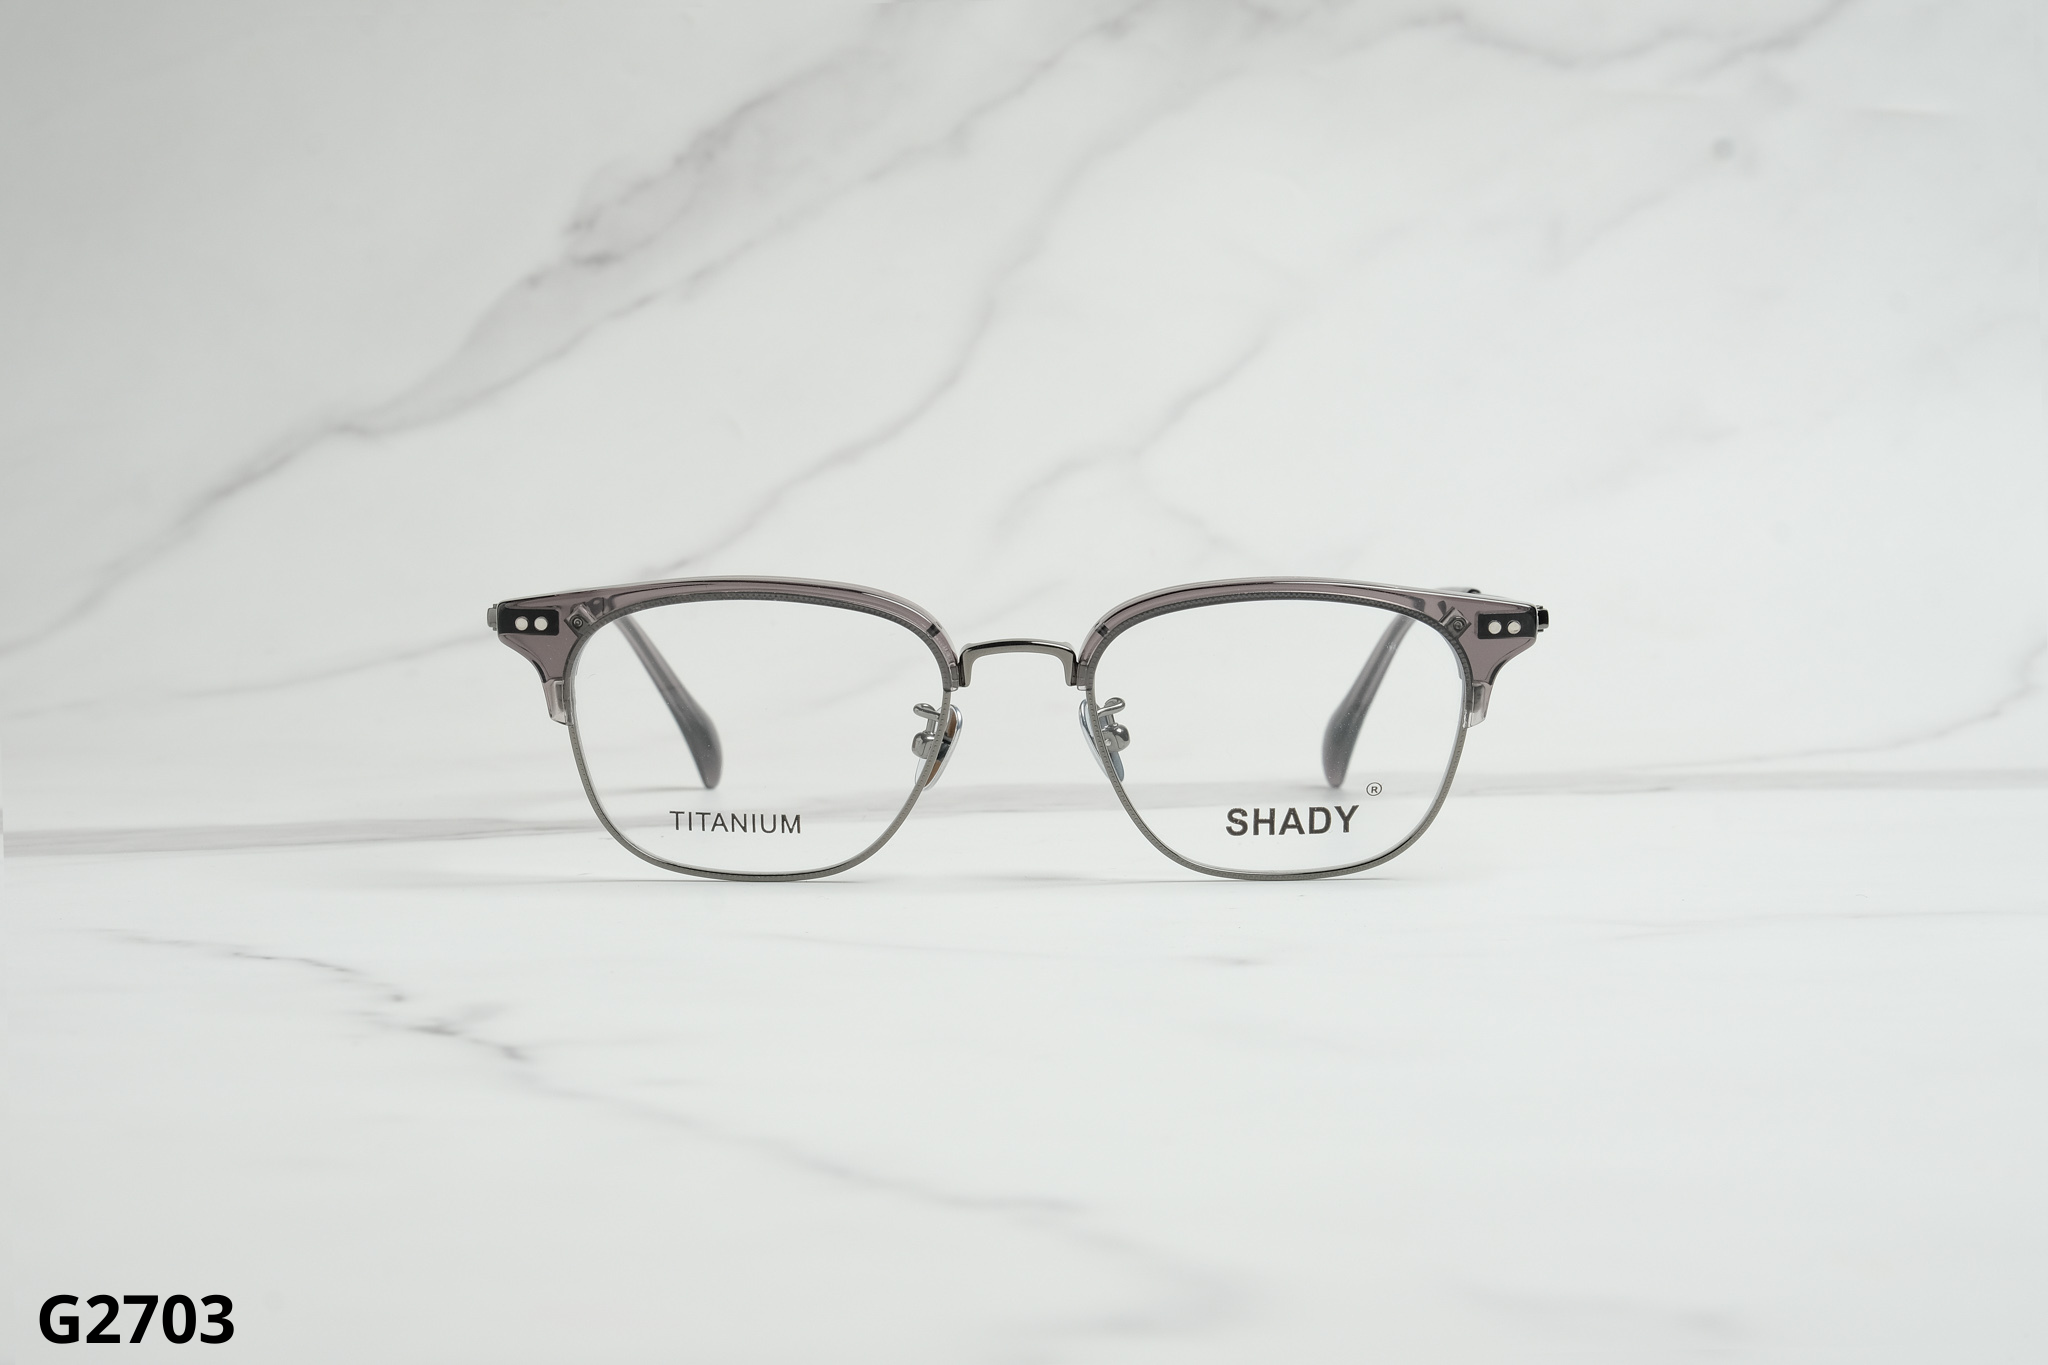  SHADY Eyewear - Glasses - G2703 